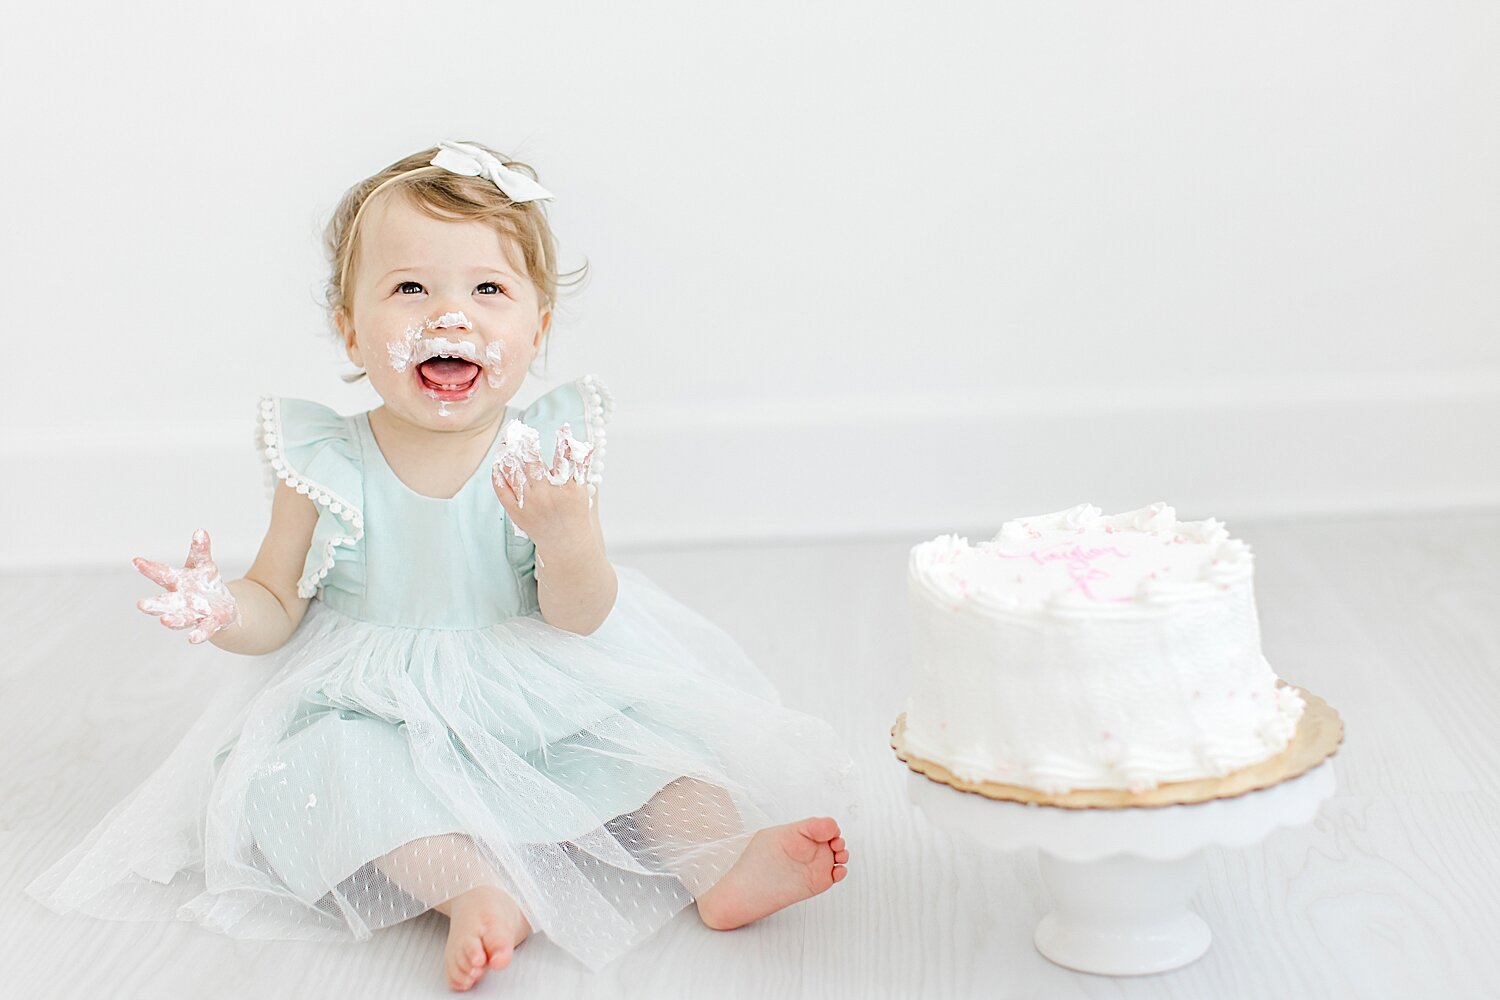 Baby girl first birthday cake smash in Westport studio. Photo by Kristin Wood Photography.